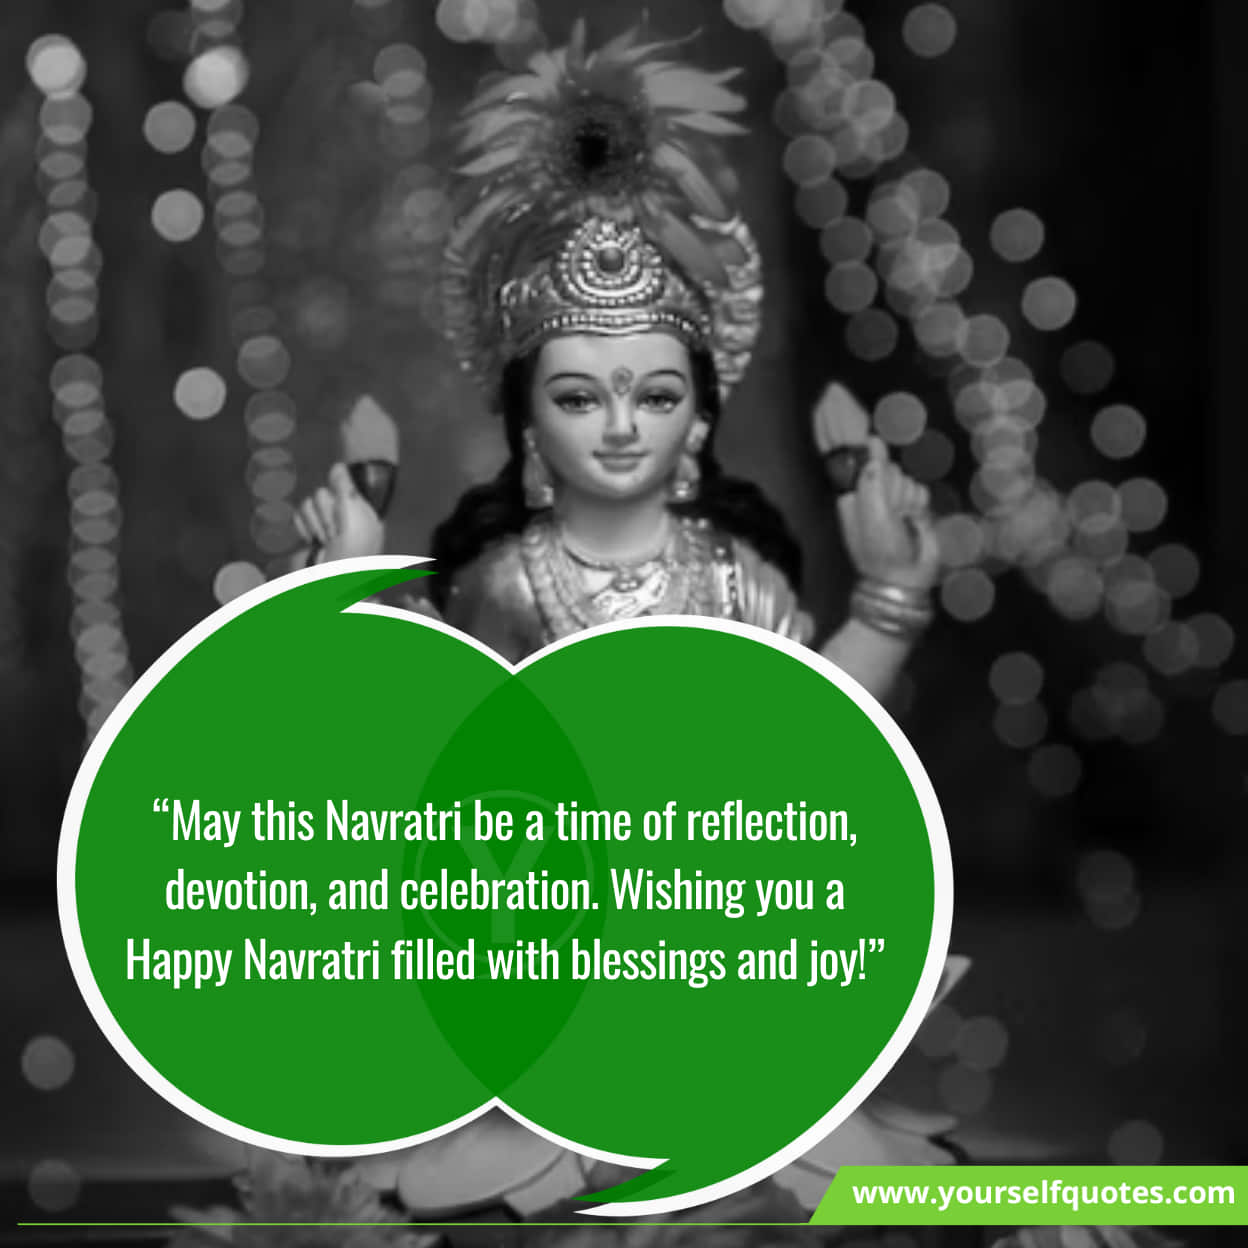 Wishing you a spiritually uplifting Navratri